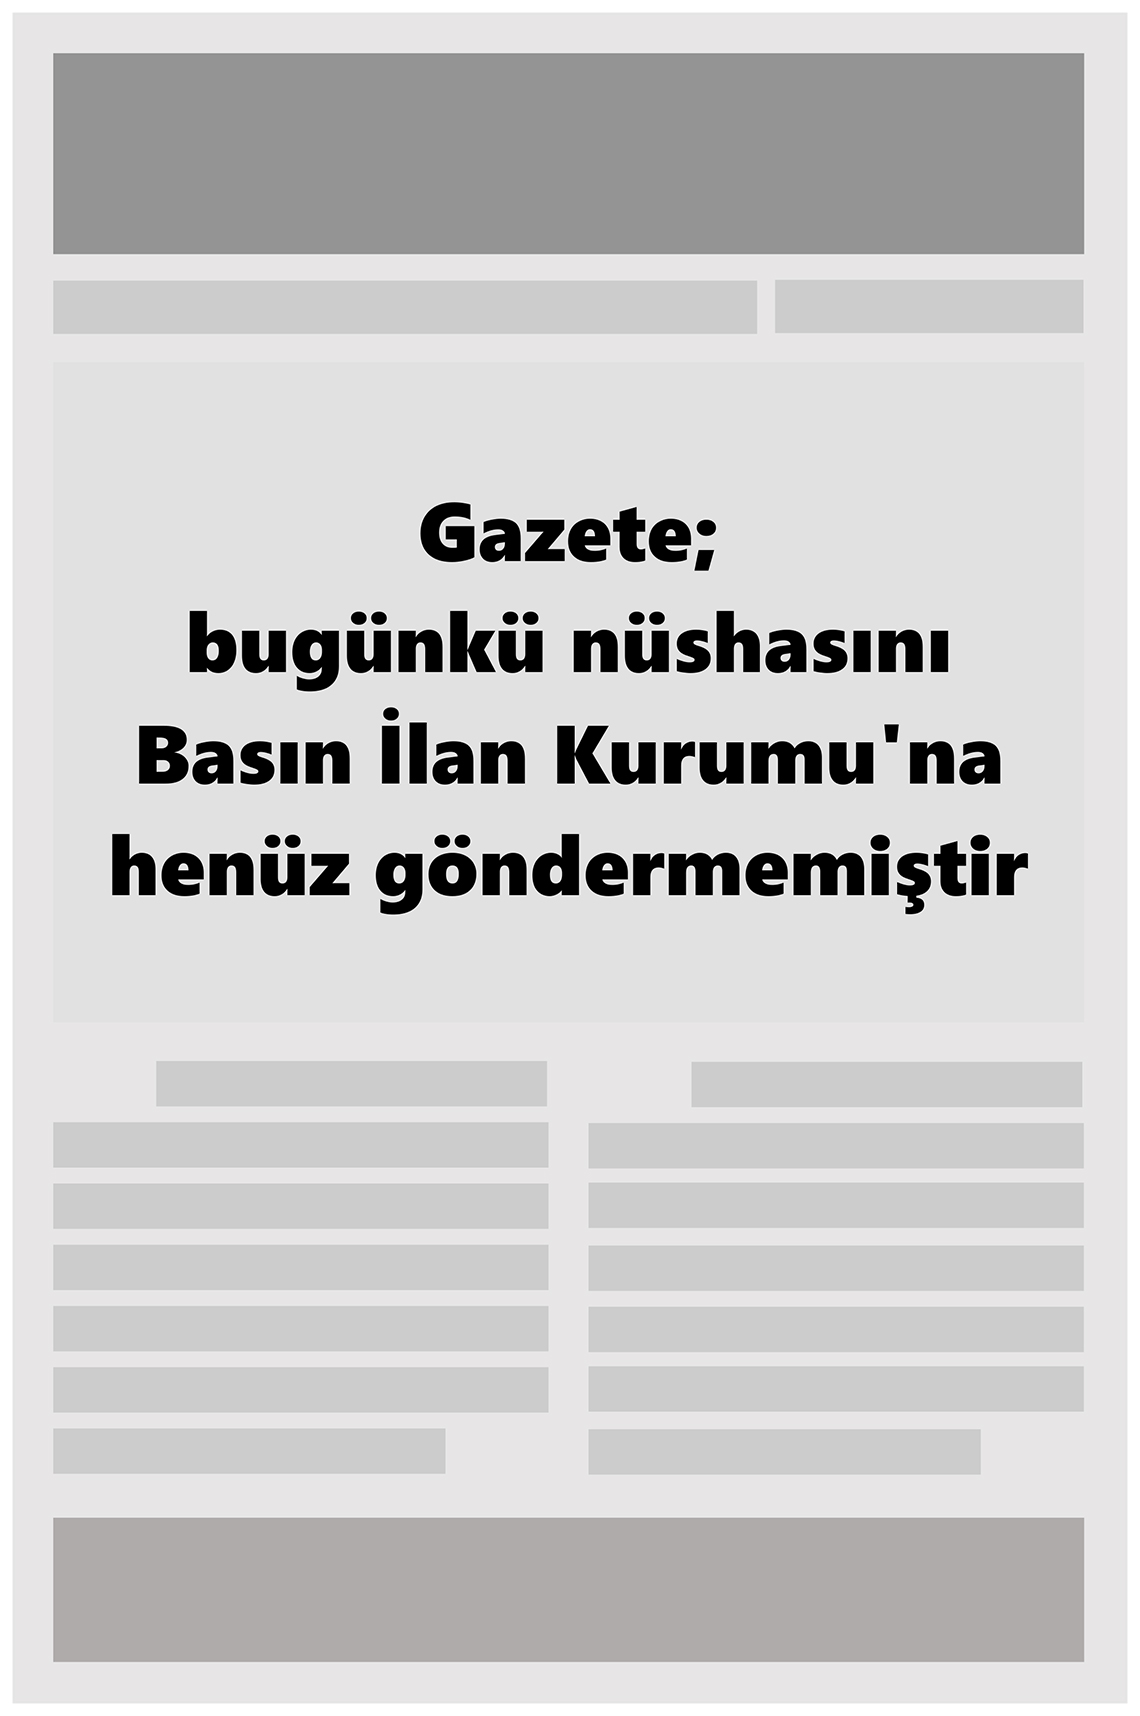 26 Mart 2023 Gazete İlksayfa Gazete Manşeti